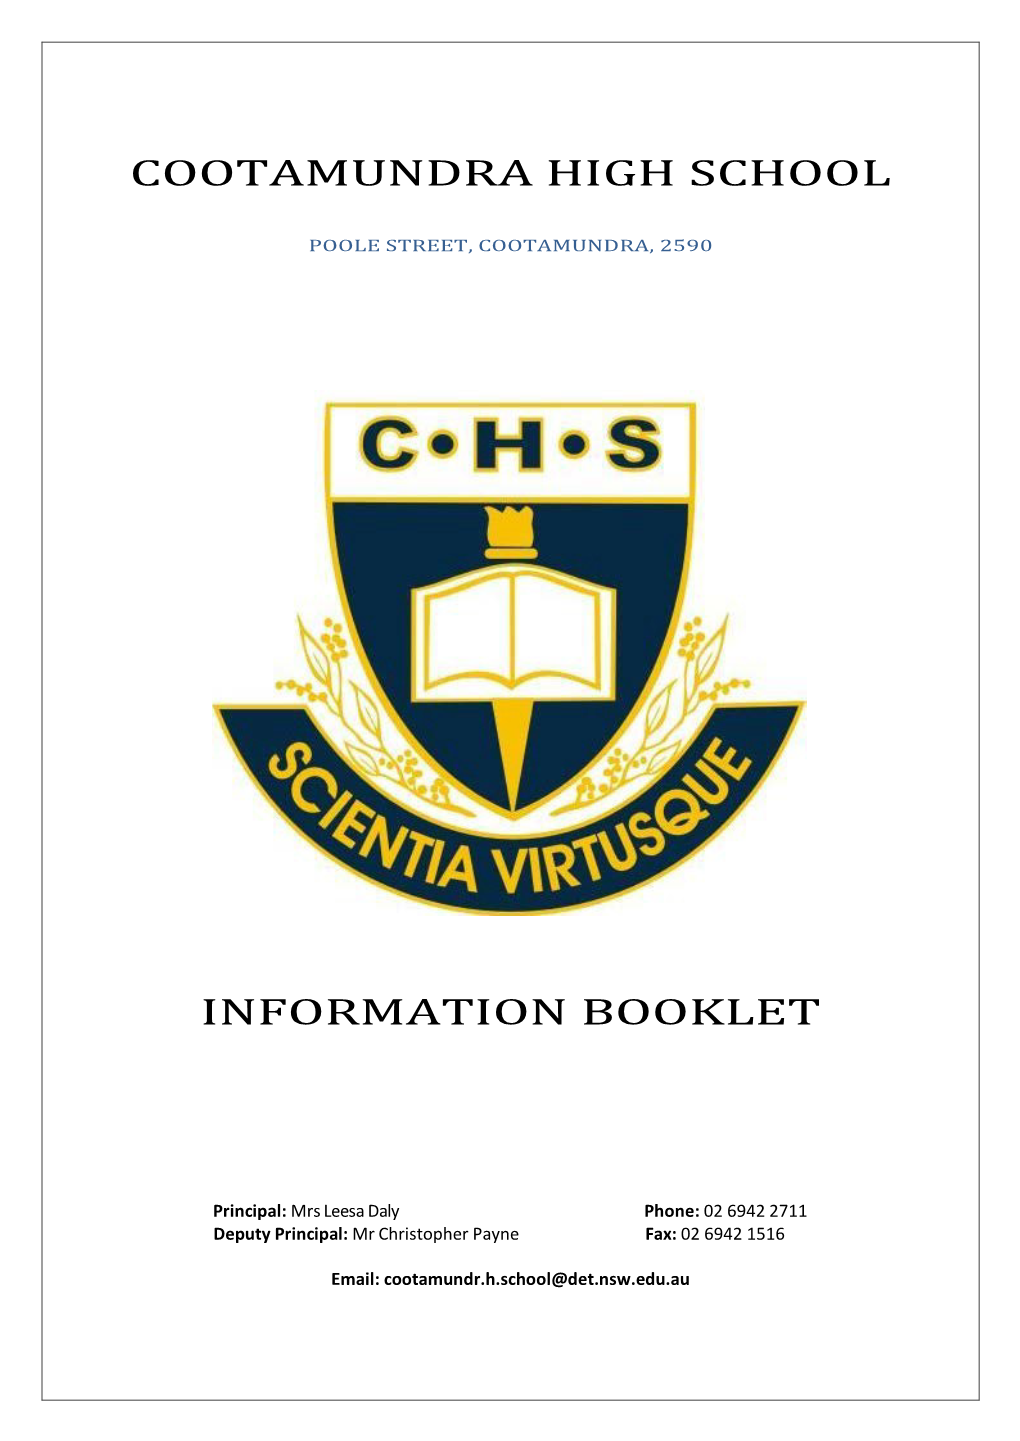 Cootamundra High School Information Booklet